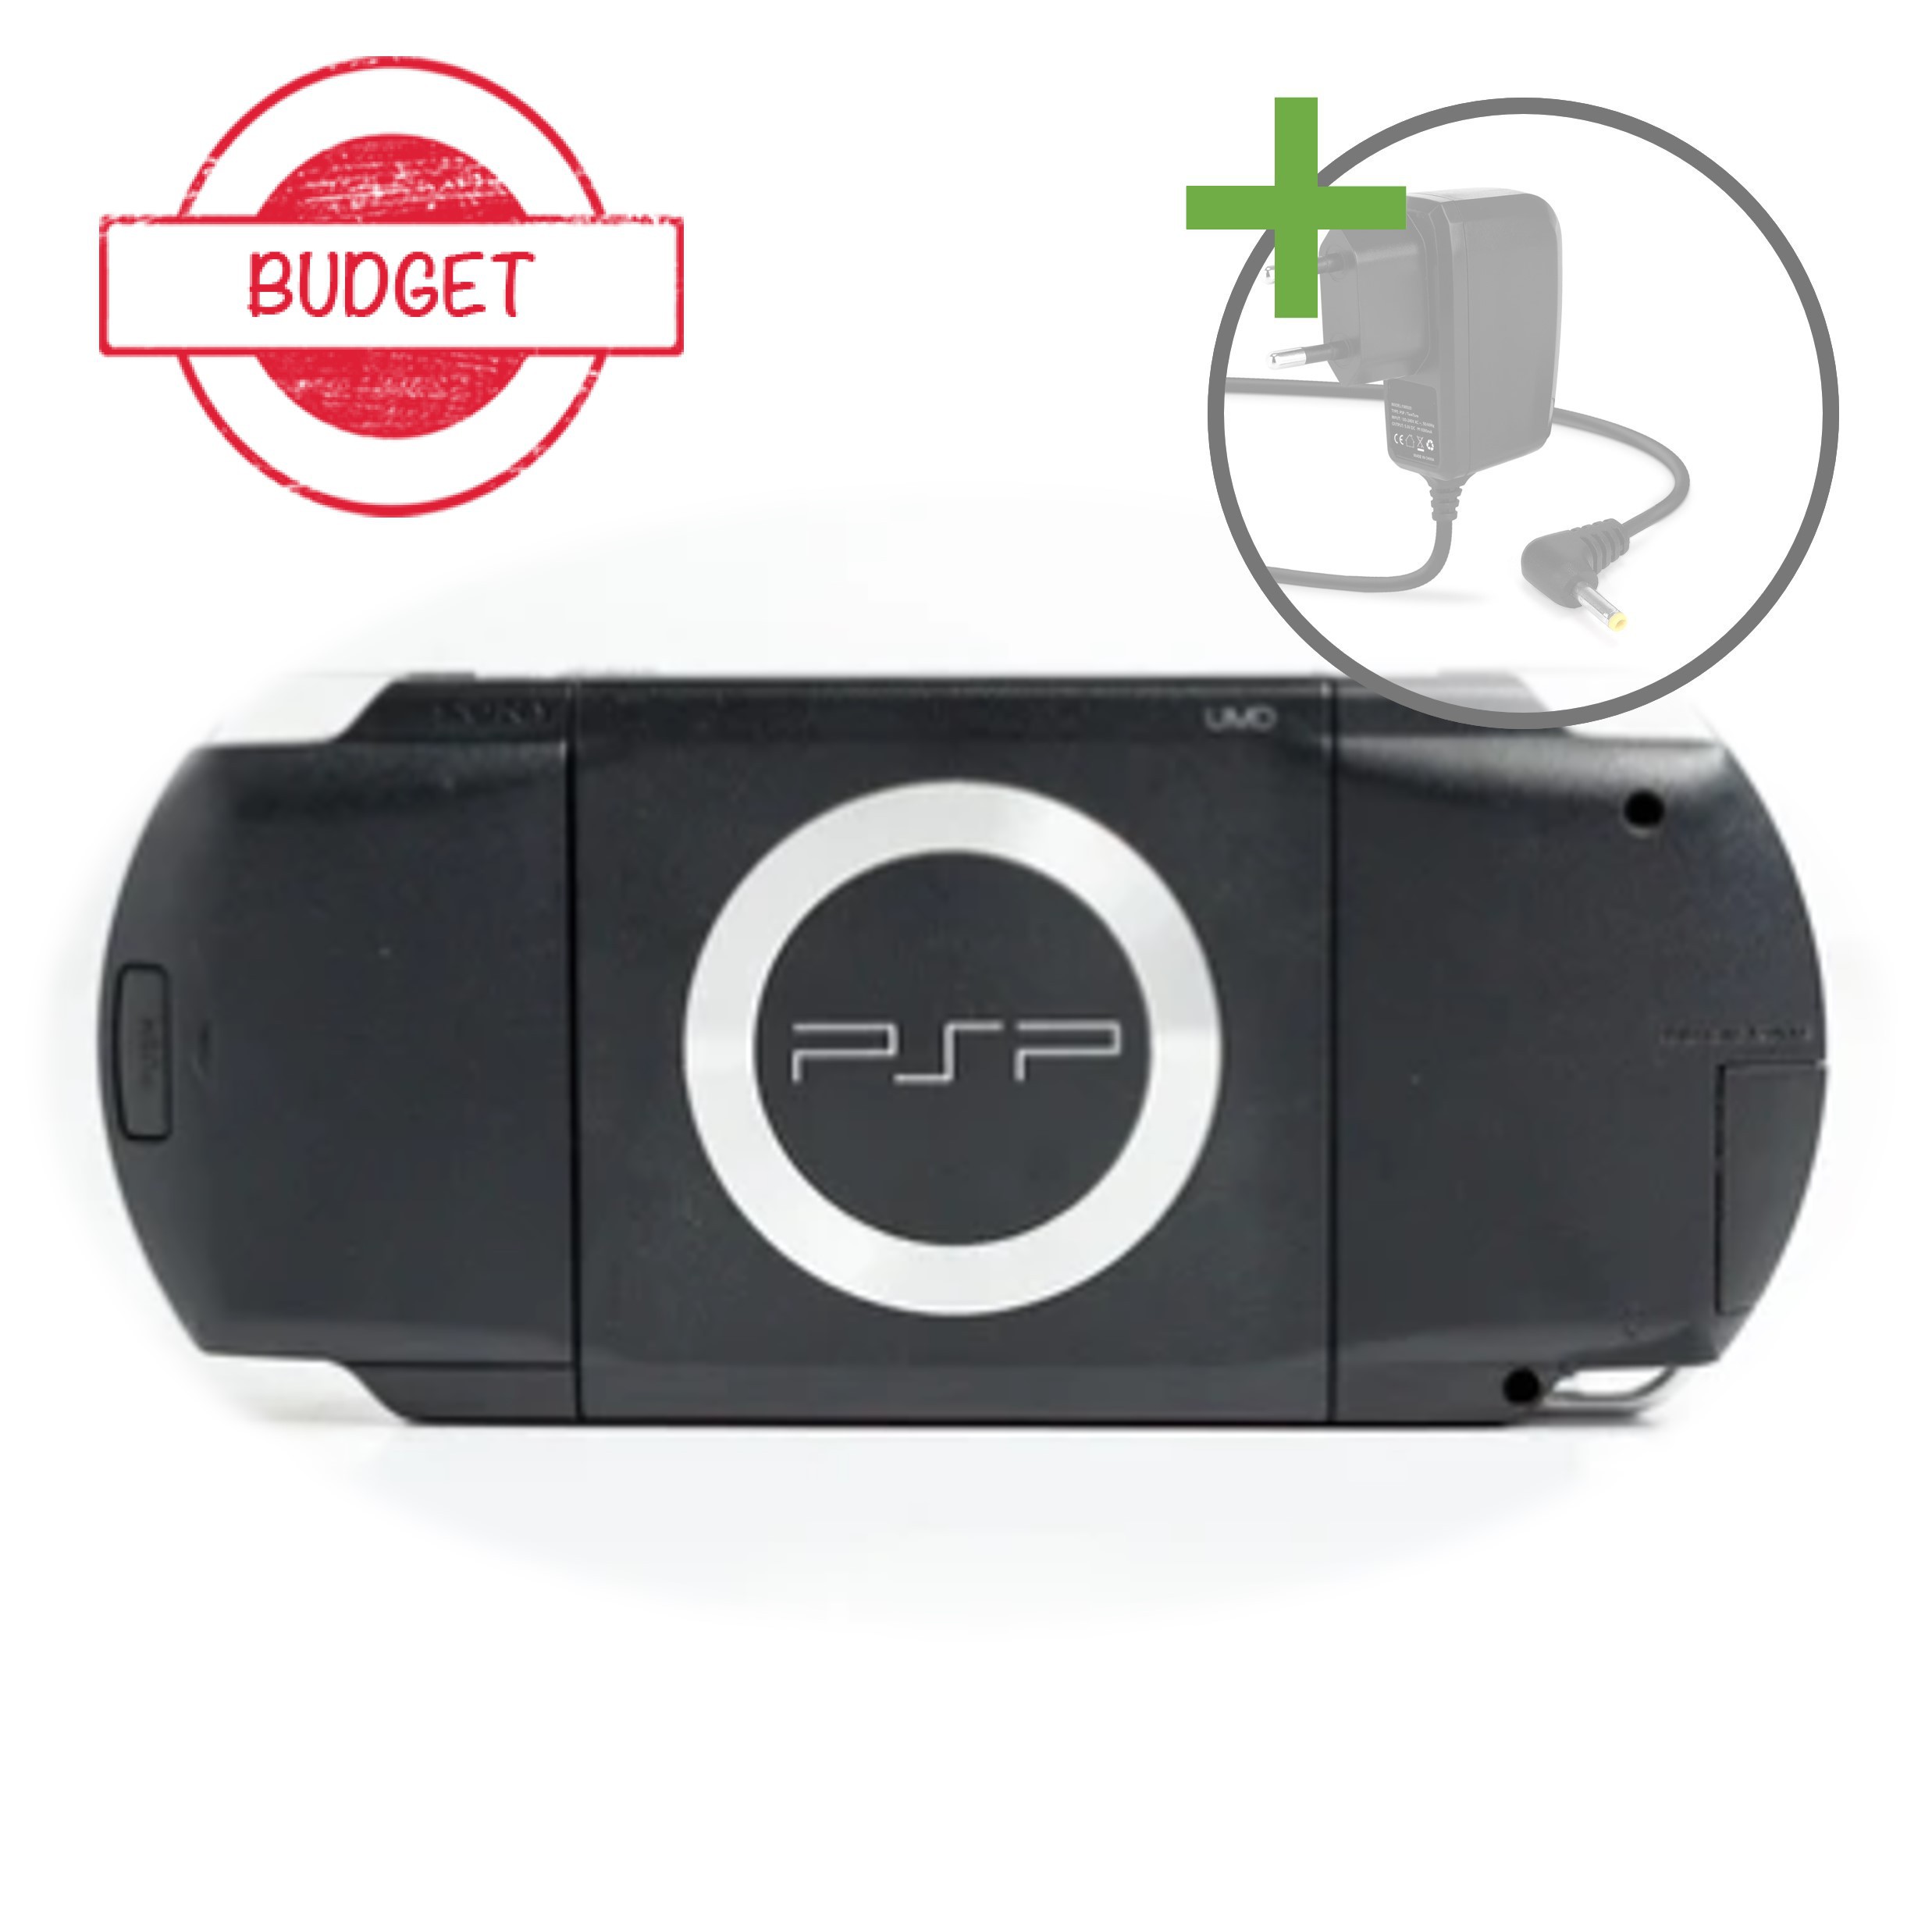 Playstation Portable PSP 1000 - Zwart - Budget - Playstation Portable Hardware - 2